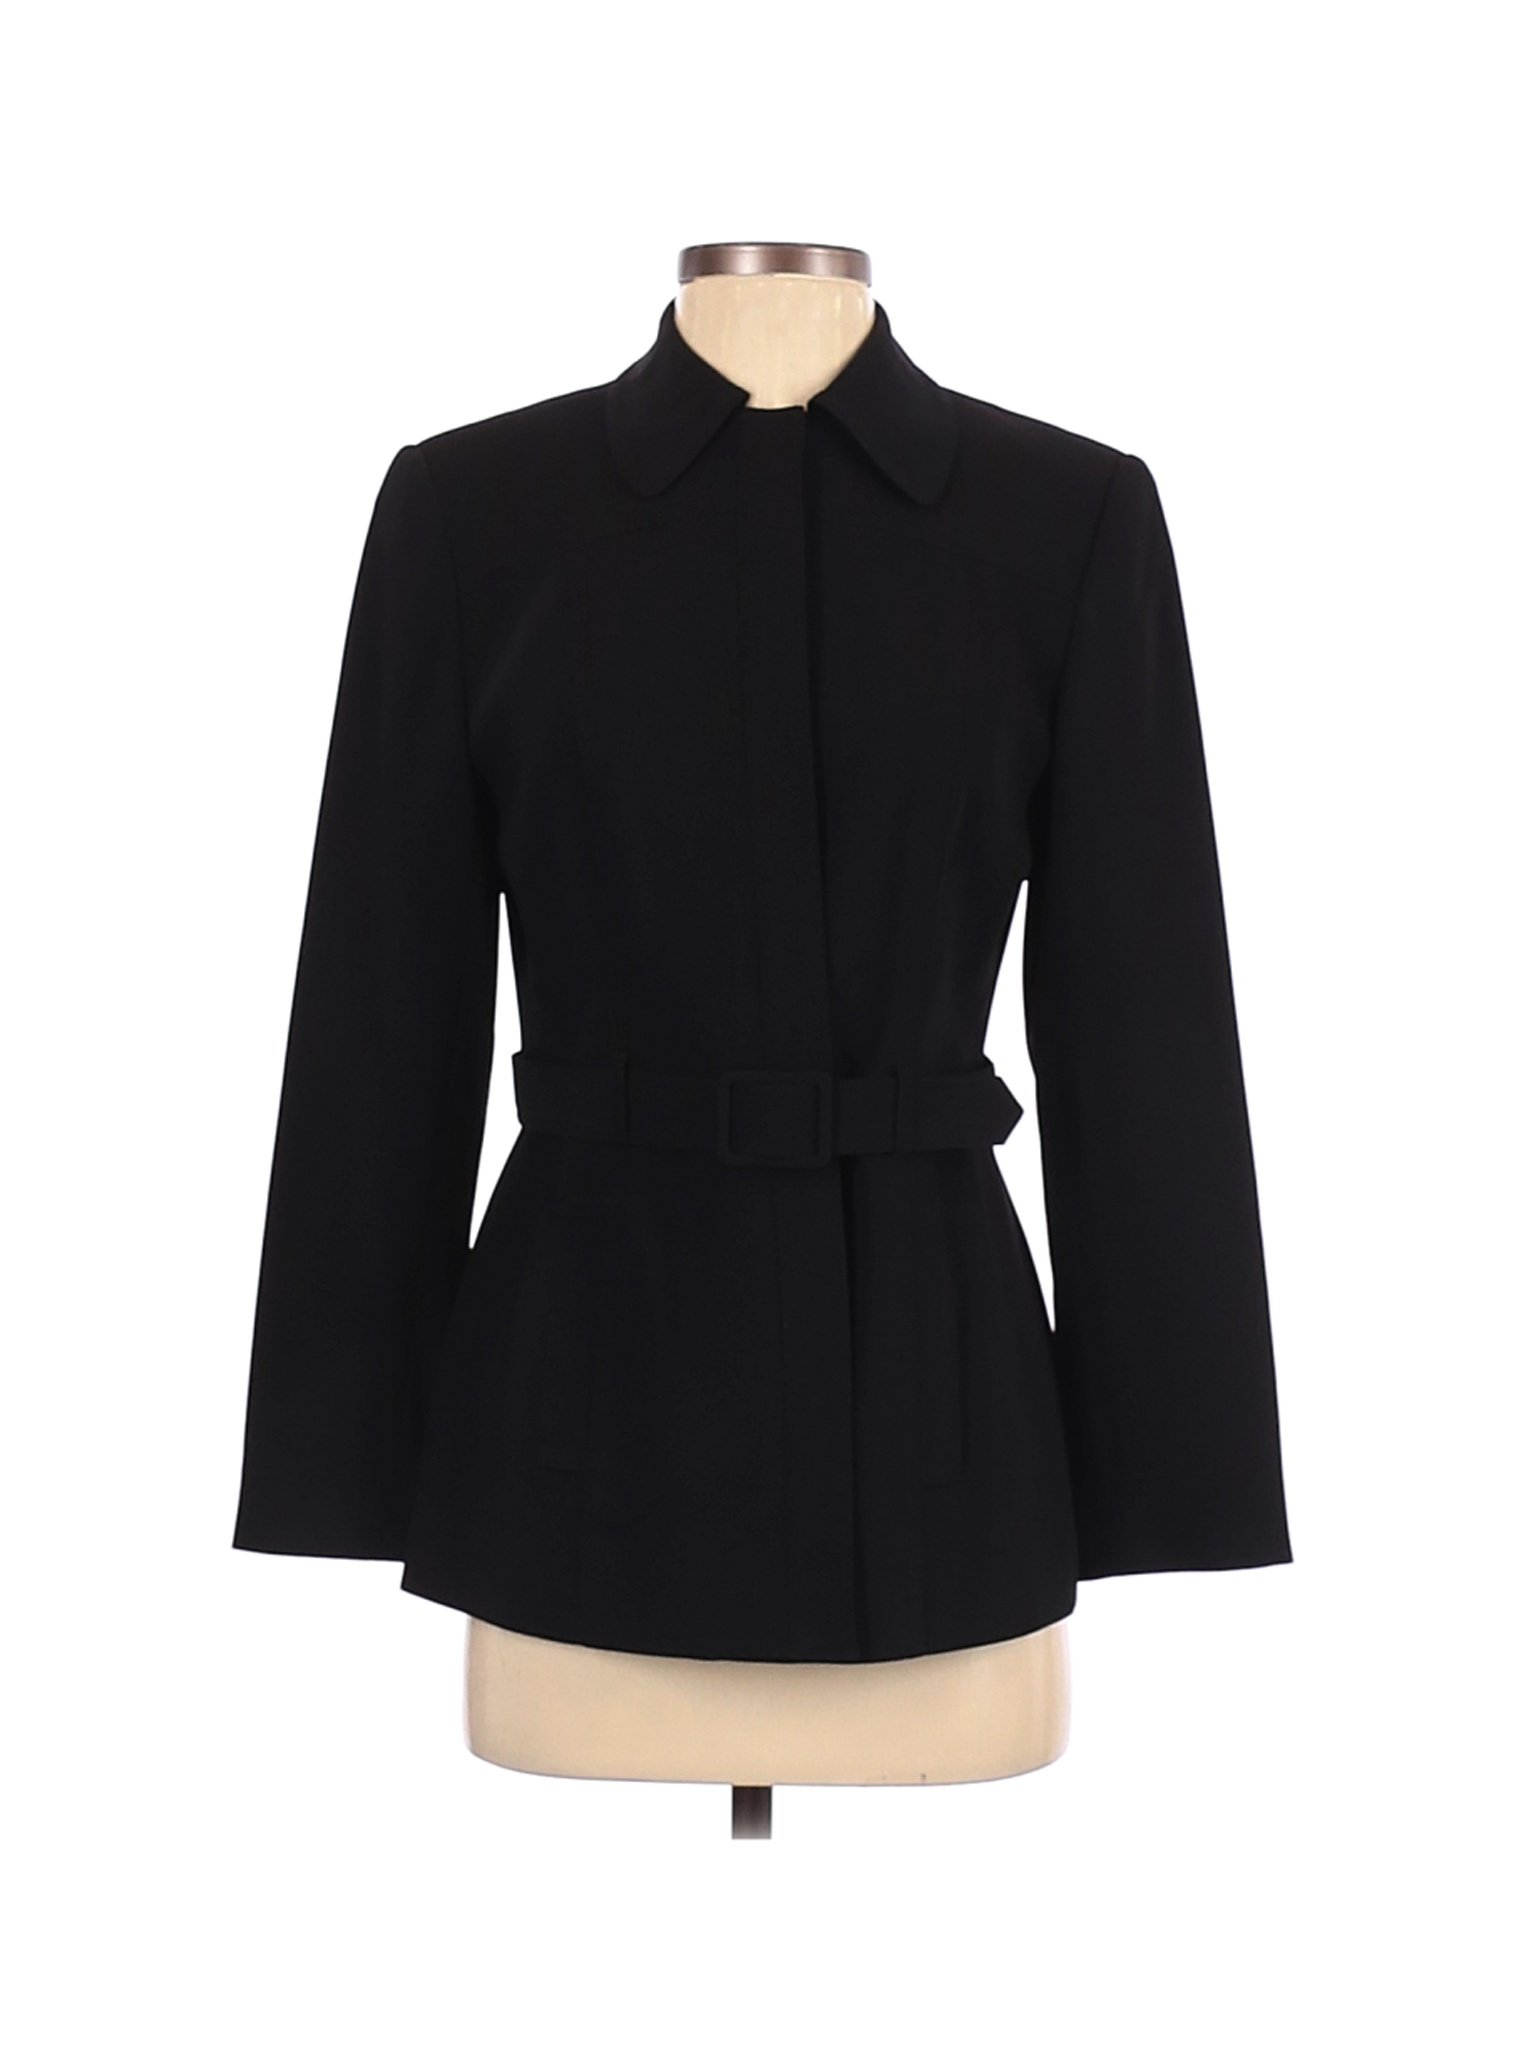 Ann Taylor Women Black Coat 4 Petites | eBay